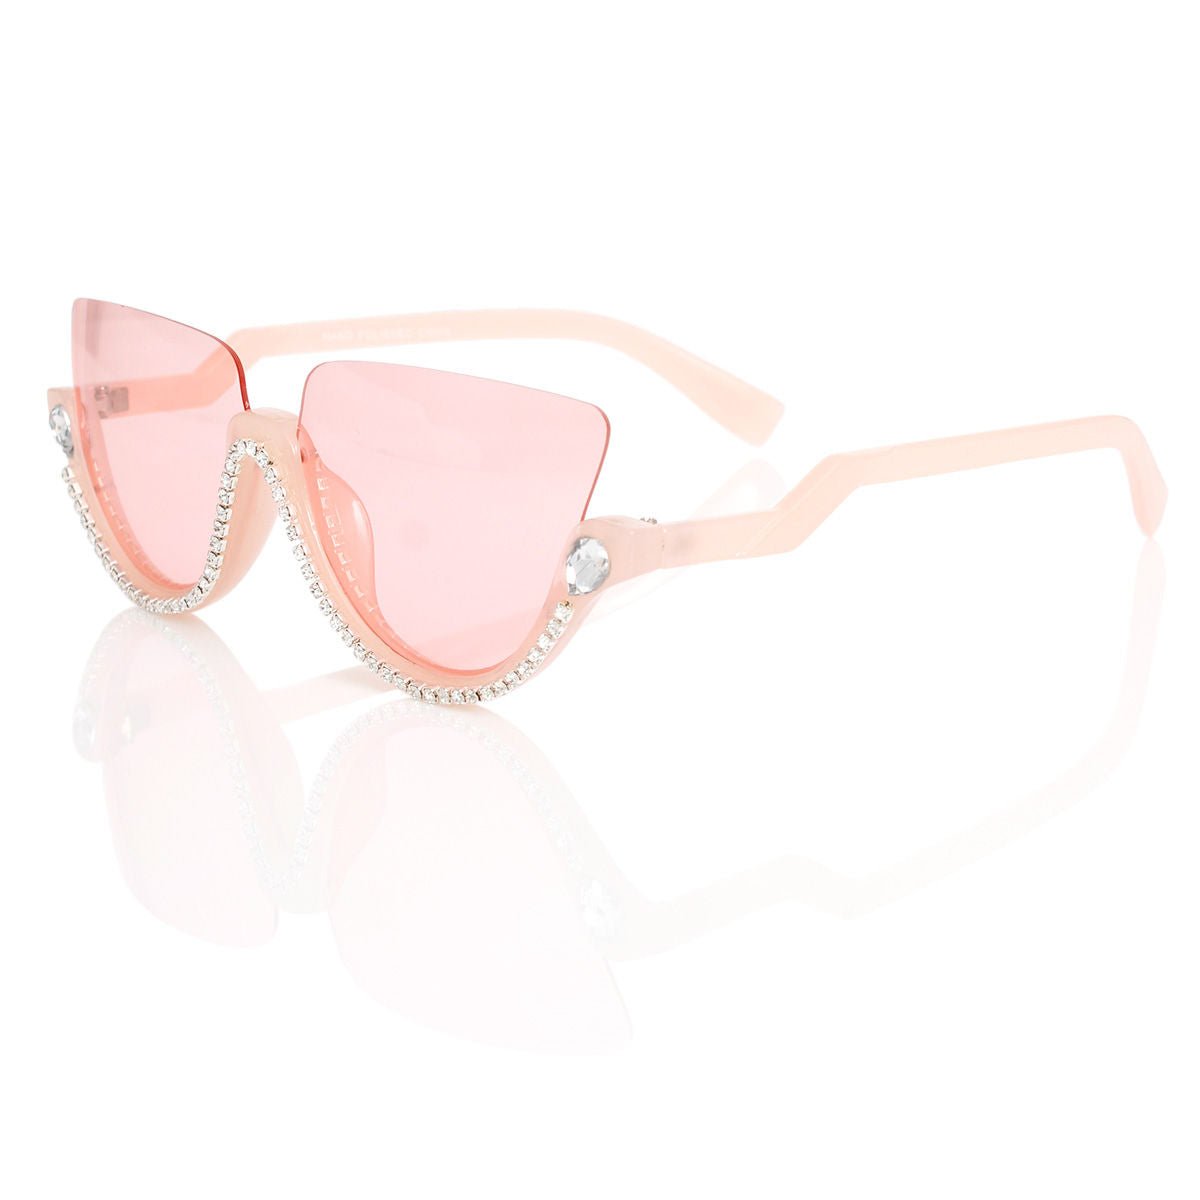 Sunglasses Half Frame Pink Eyewear for Women - Bae Apparel